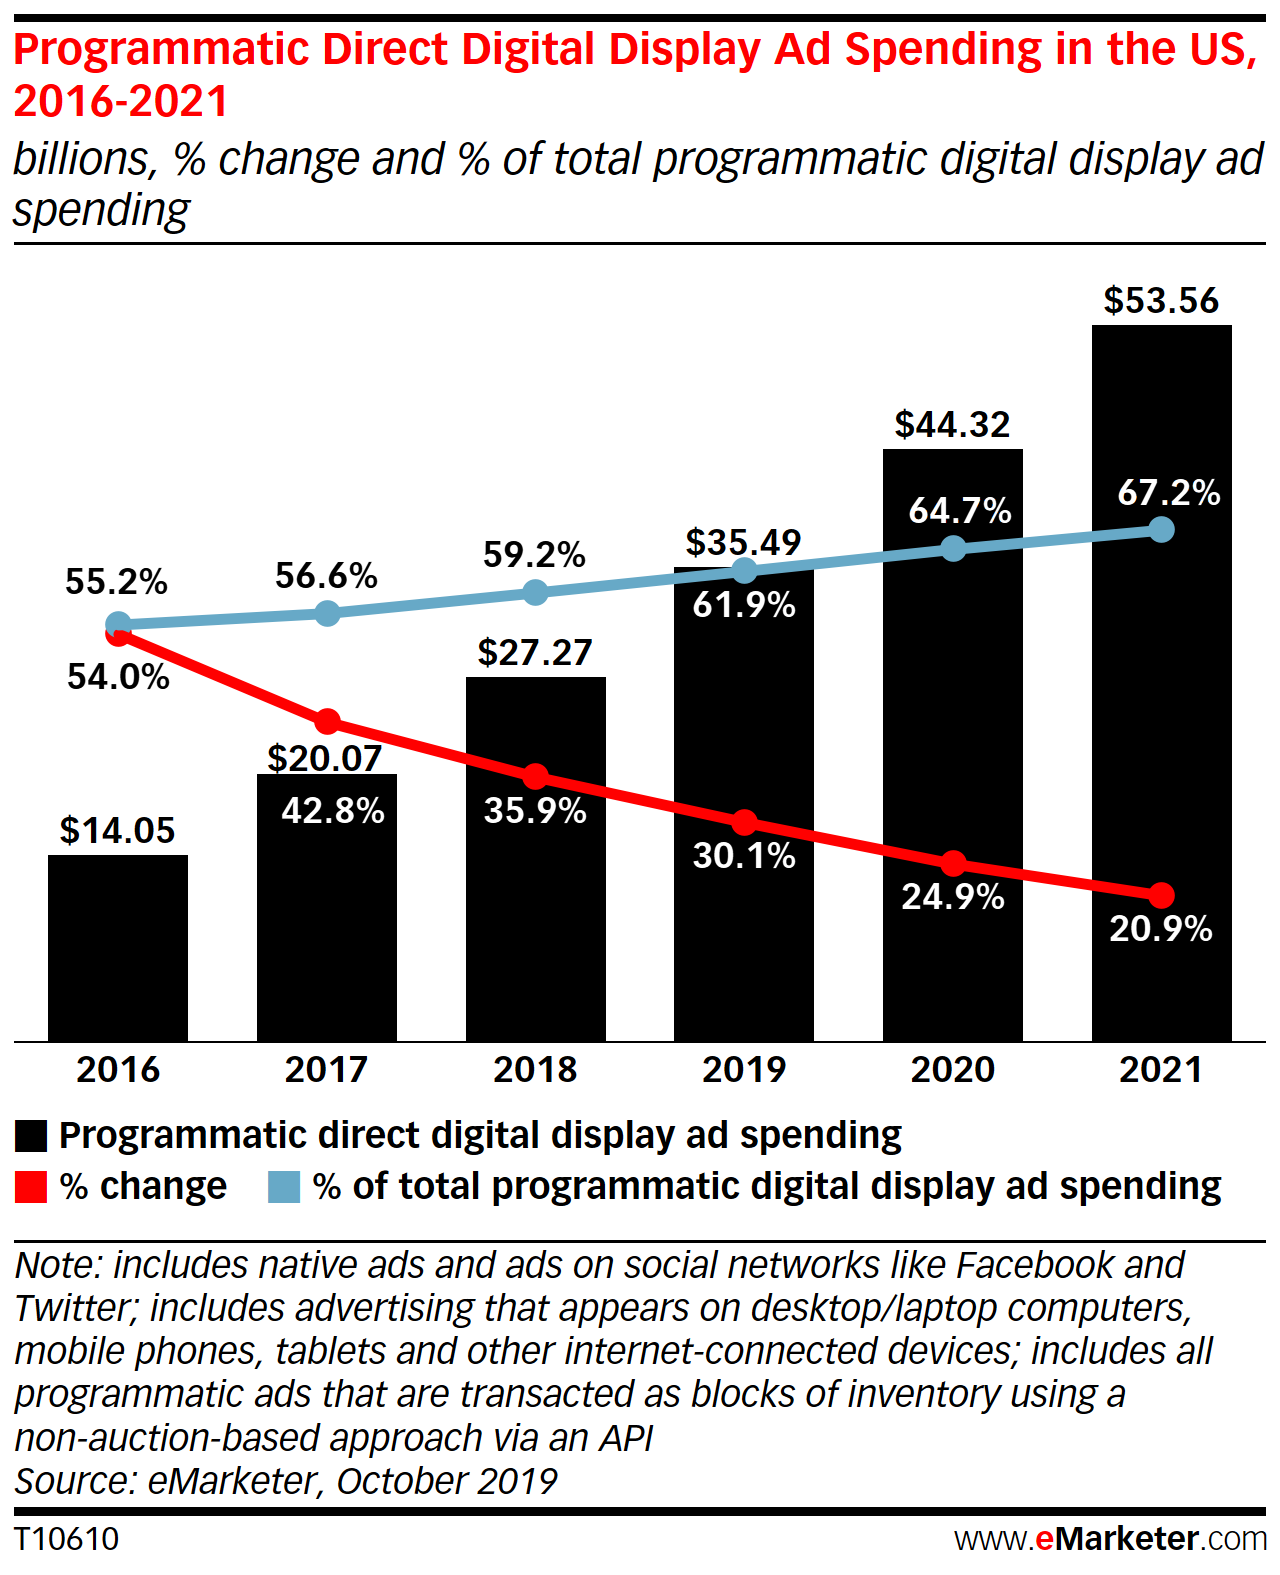 programmatic-direct-digital-display-ad-spending-us-2016-2021-emarketer.png